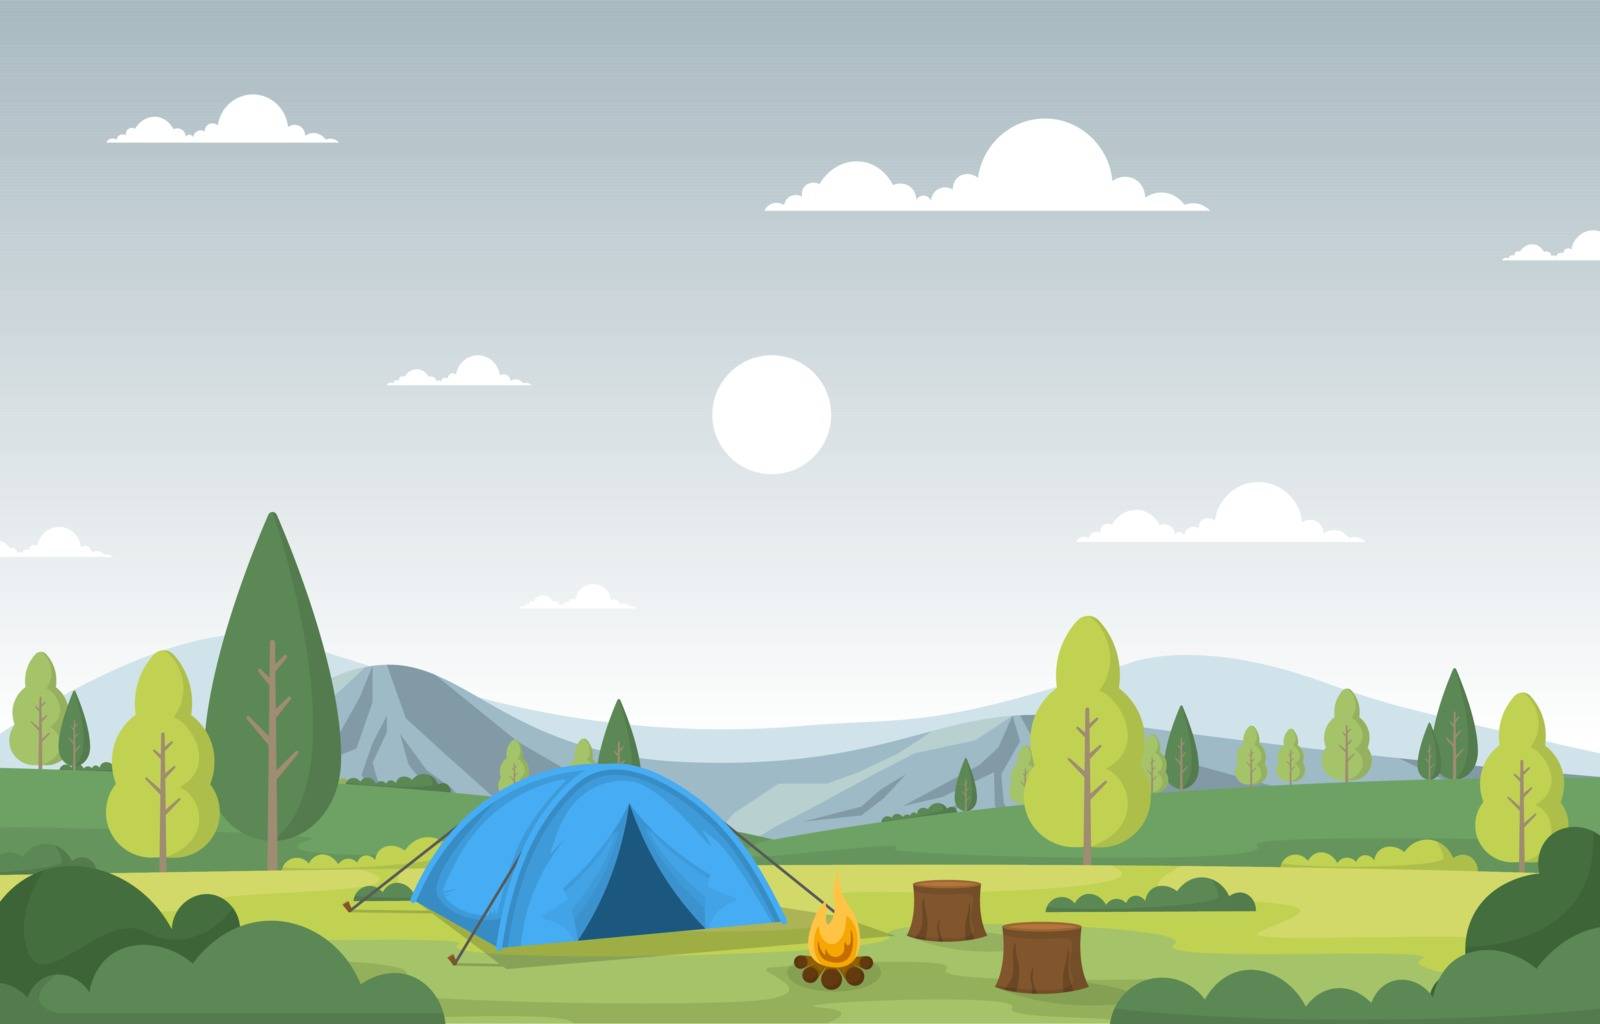 Camping Adventure Outdoor Park Mountain Nature Landscape Cartoon Illustration